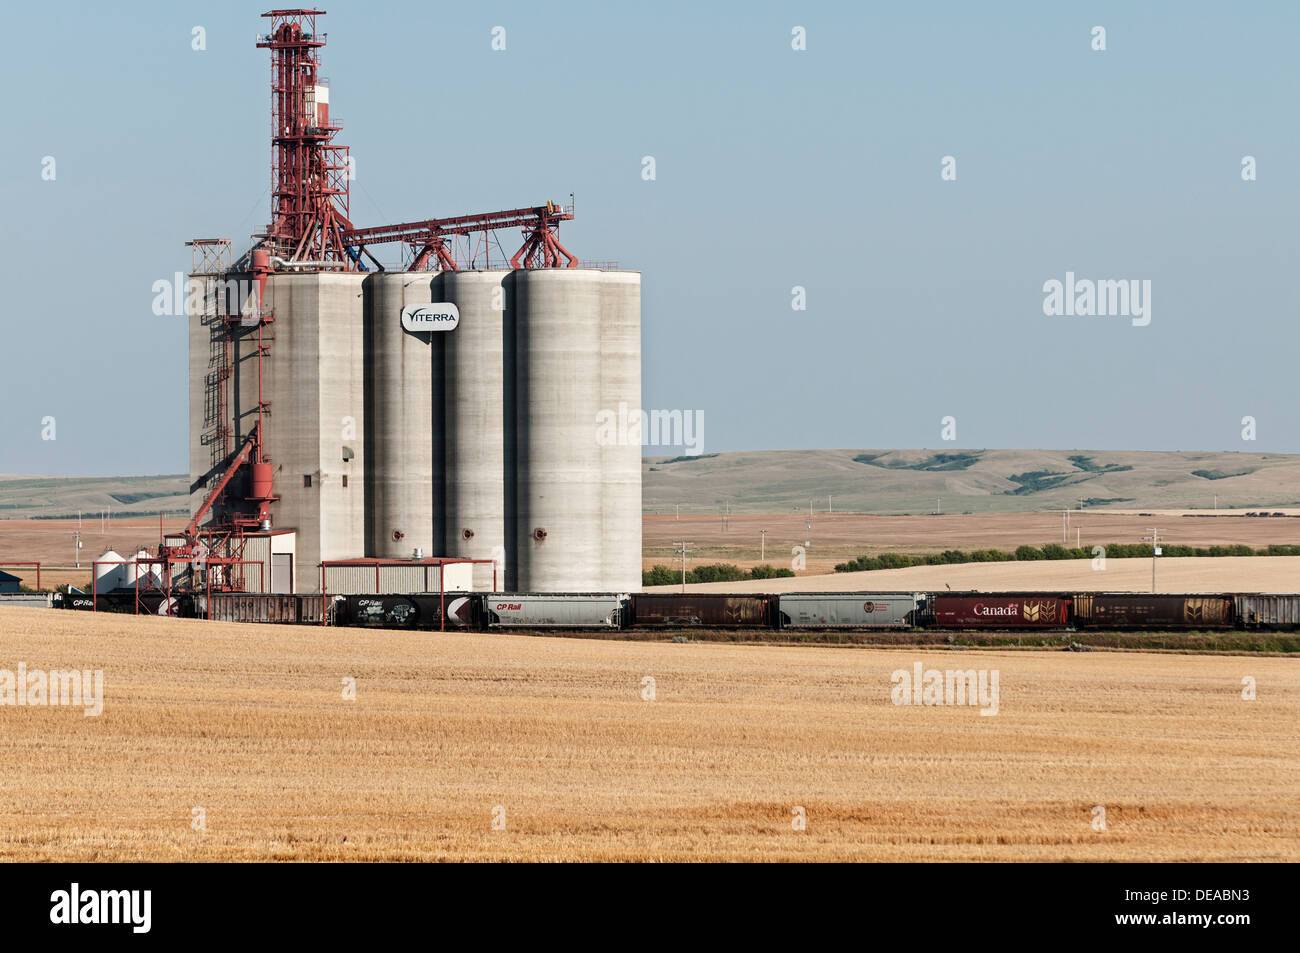 A railway siding next to a Viterra grain elevator near Gull Lake Saskatchewan Canada. A crop field of wheat in the foreground Stock Photo